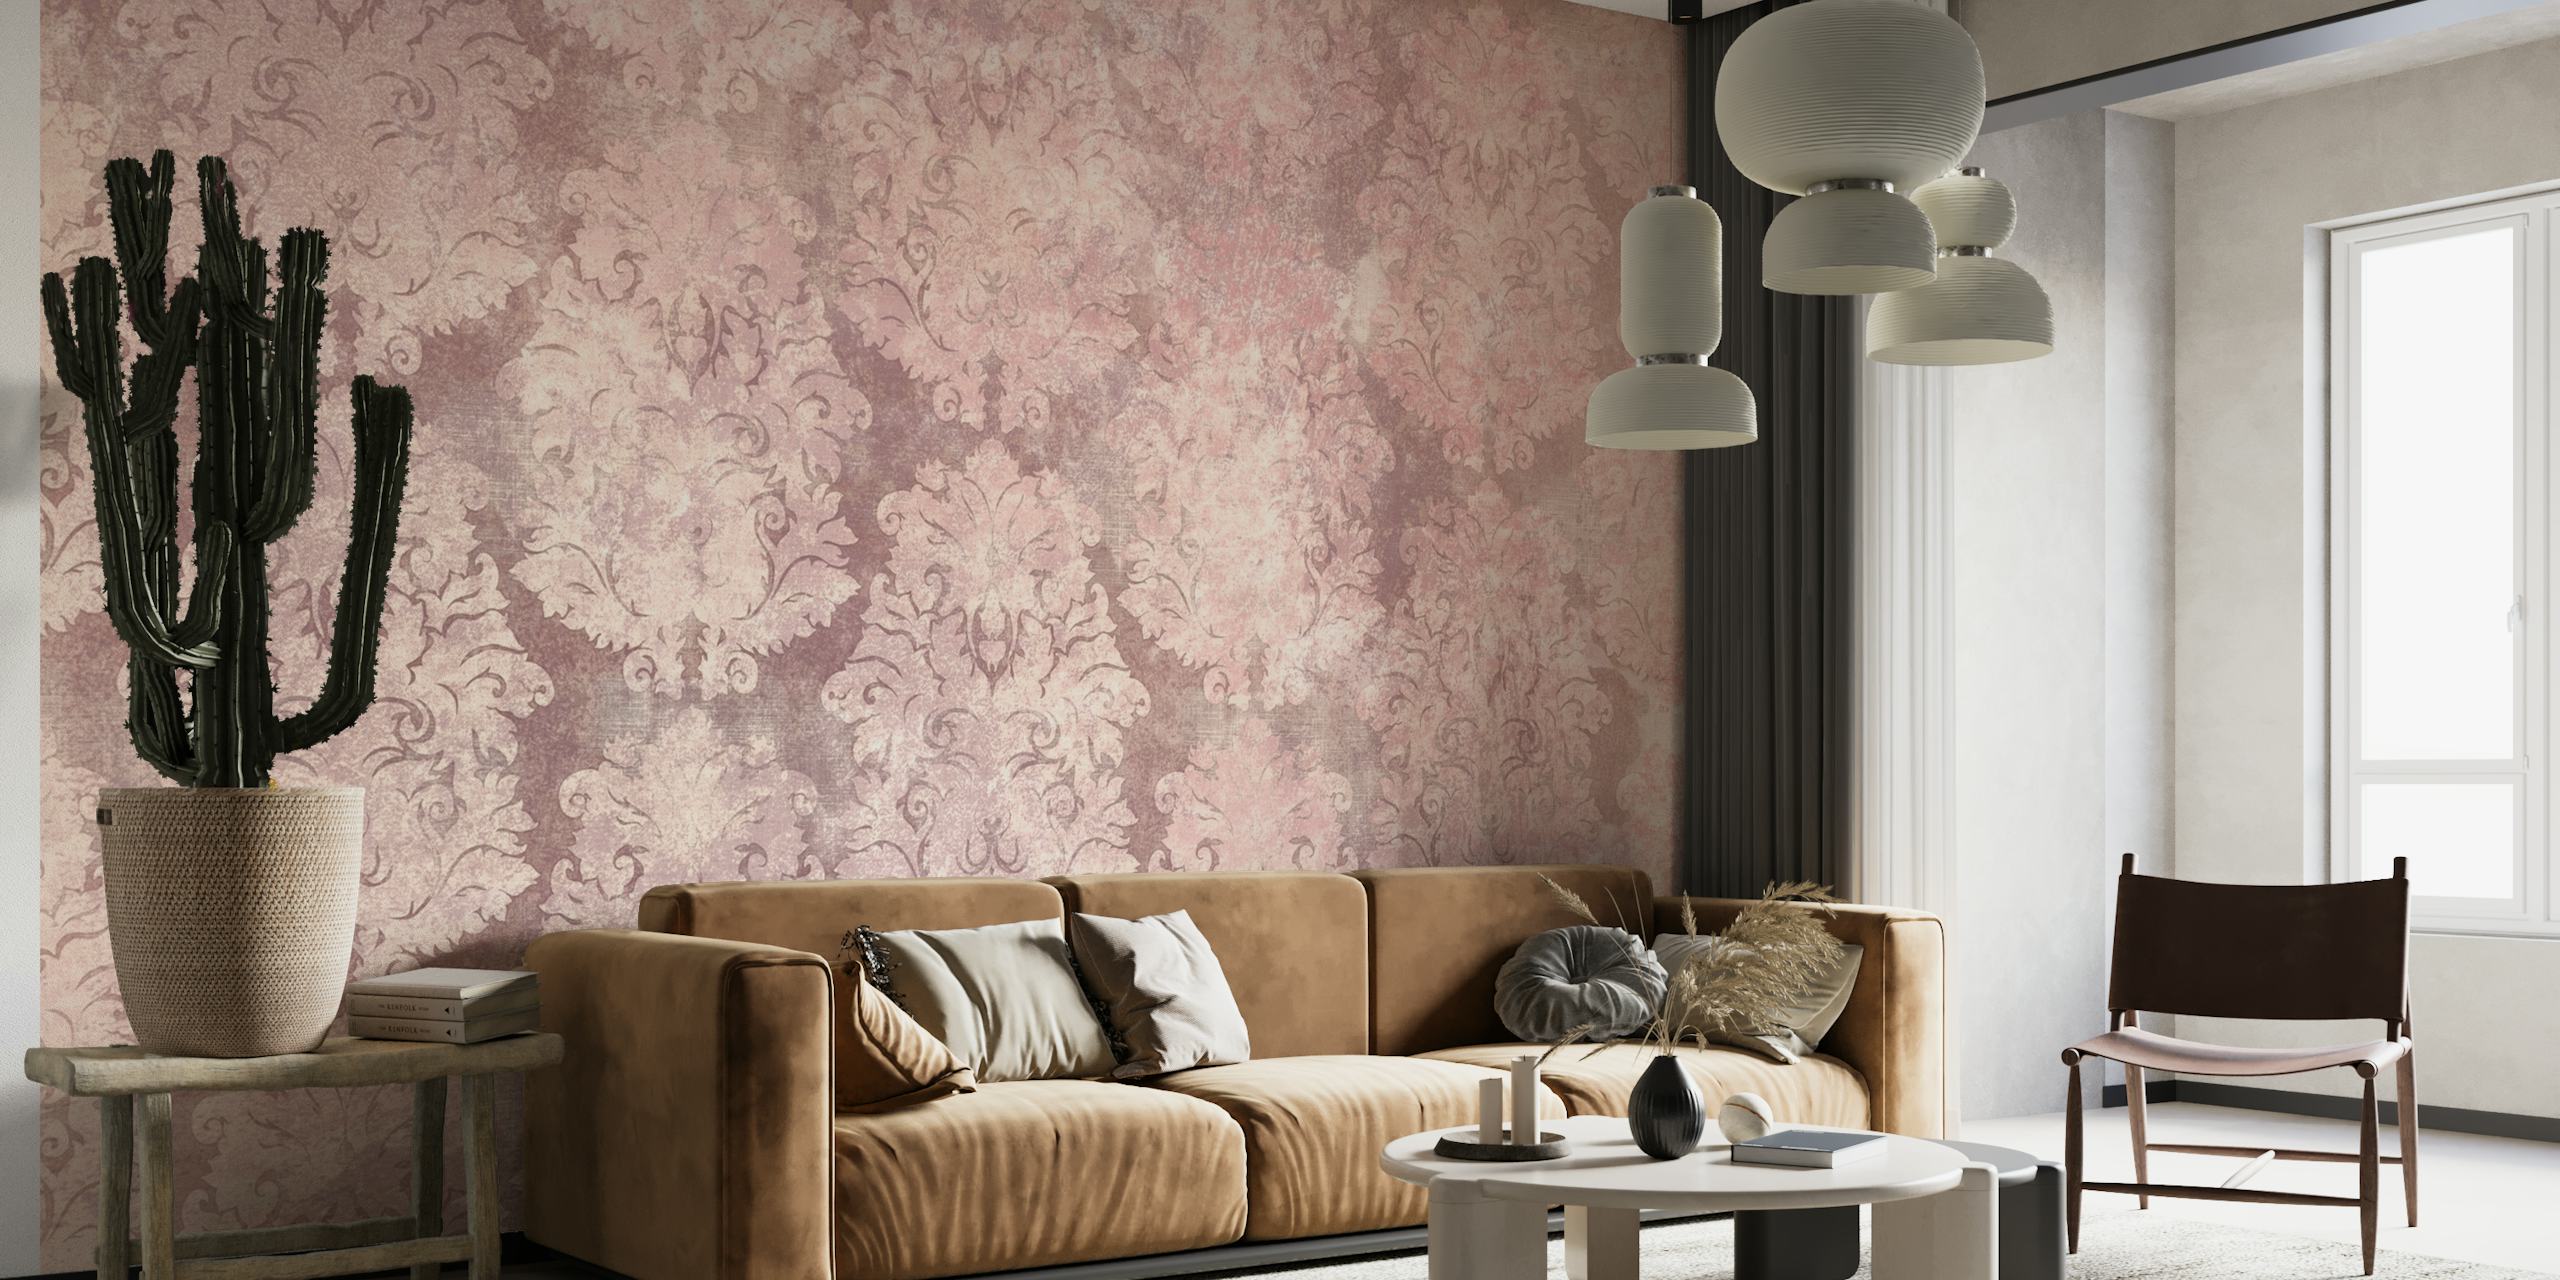 Graceful blush pink damask pattern wallpaper adding a vintage charm to interiors